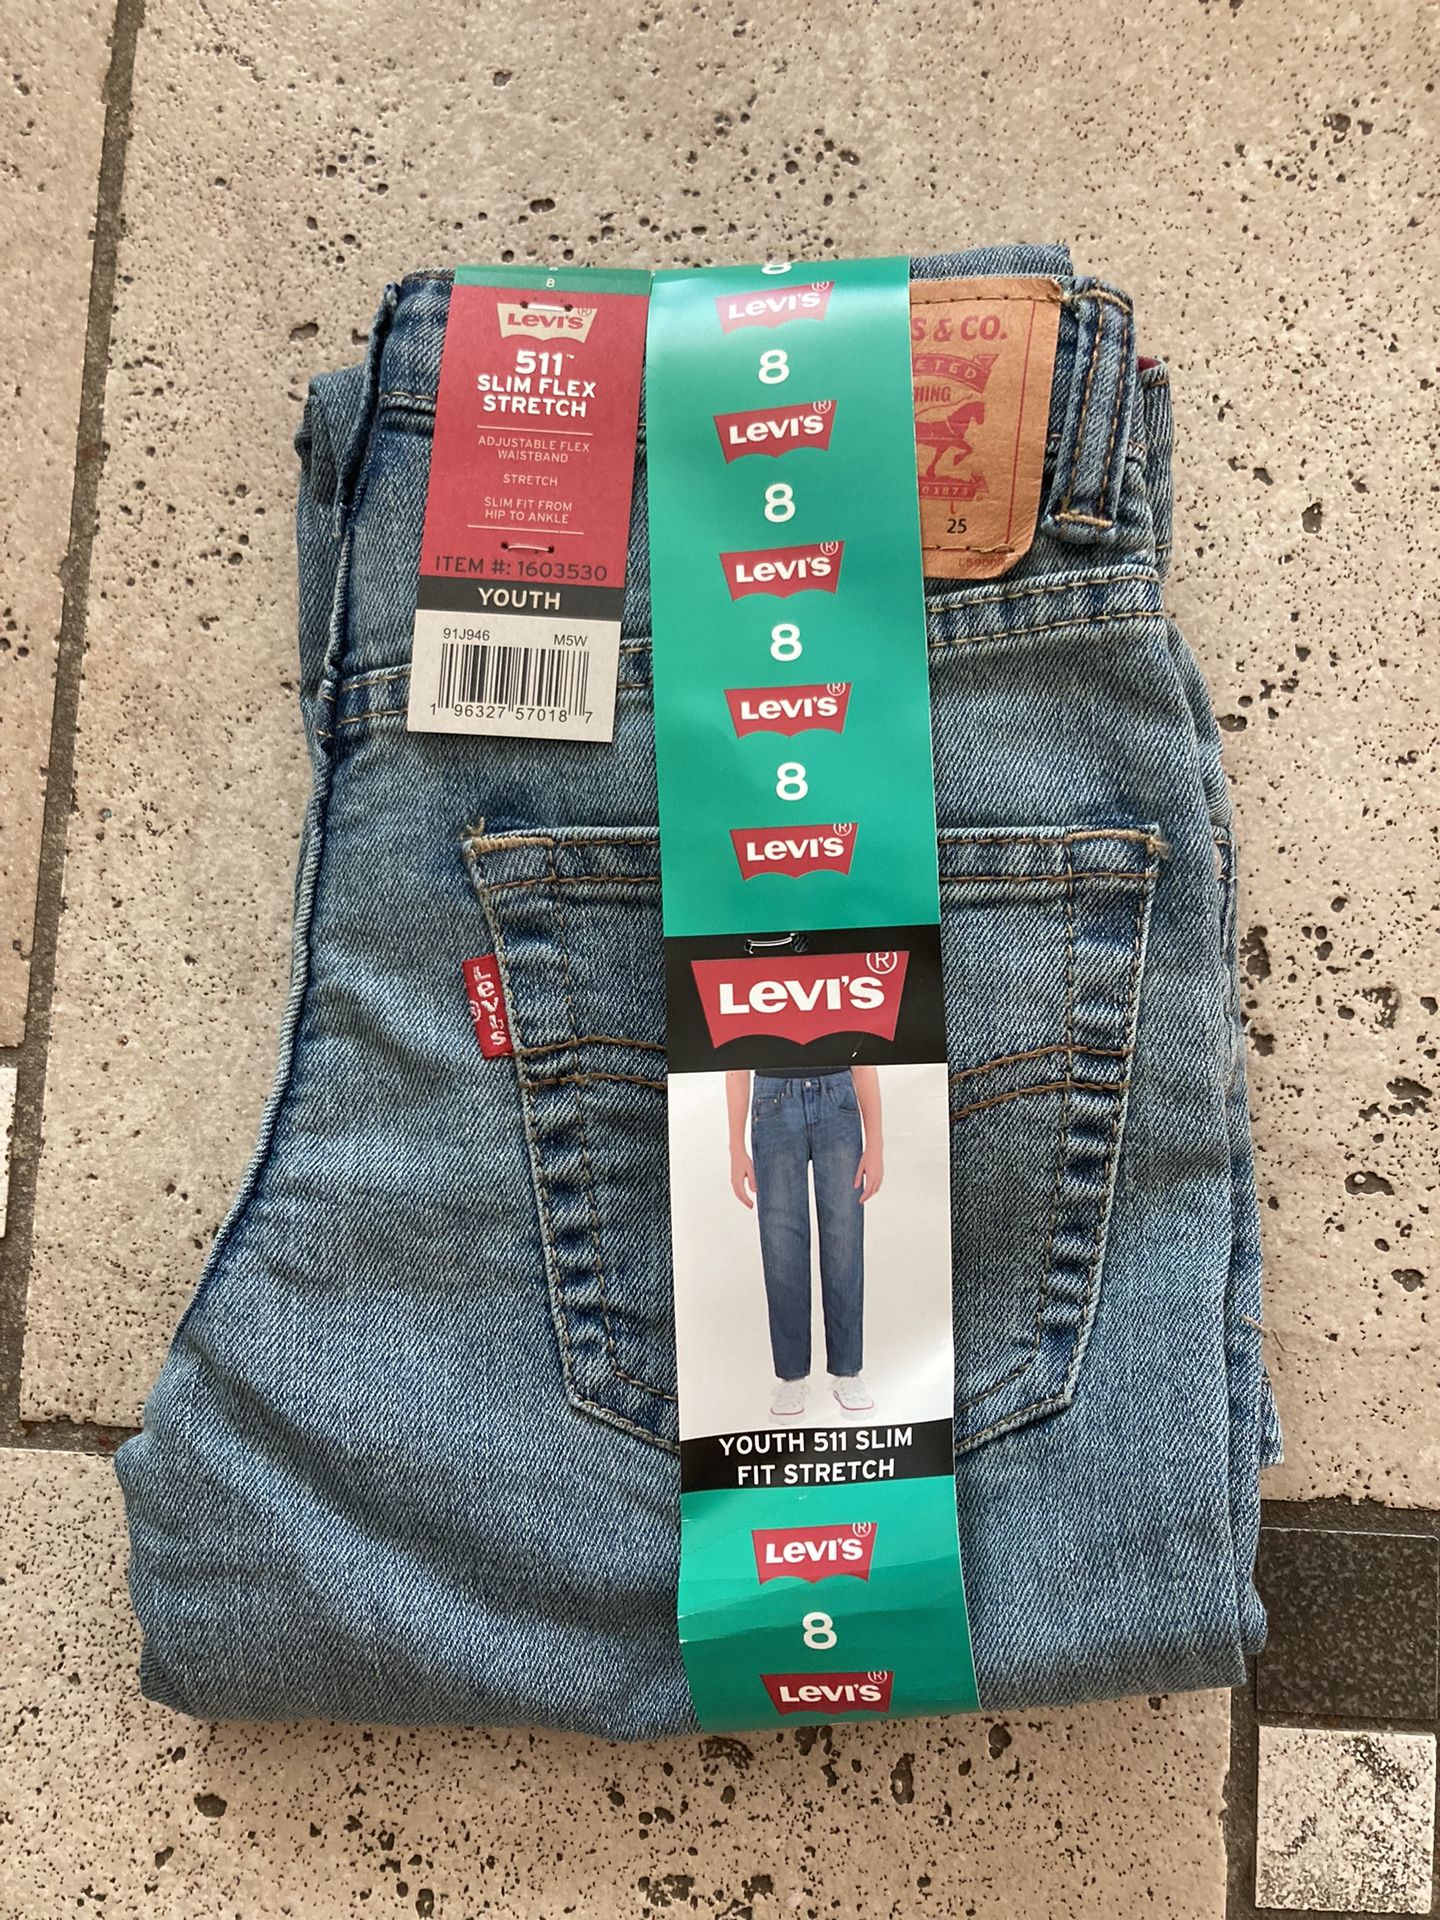 New Levi’s Boys 511 Jeans Size 8